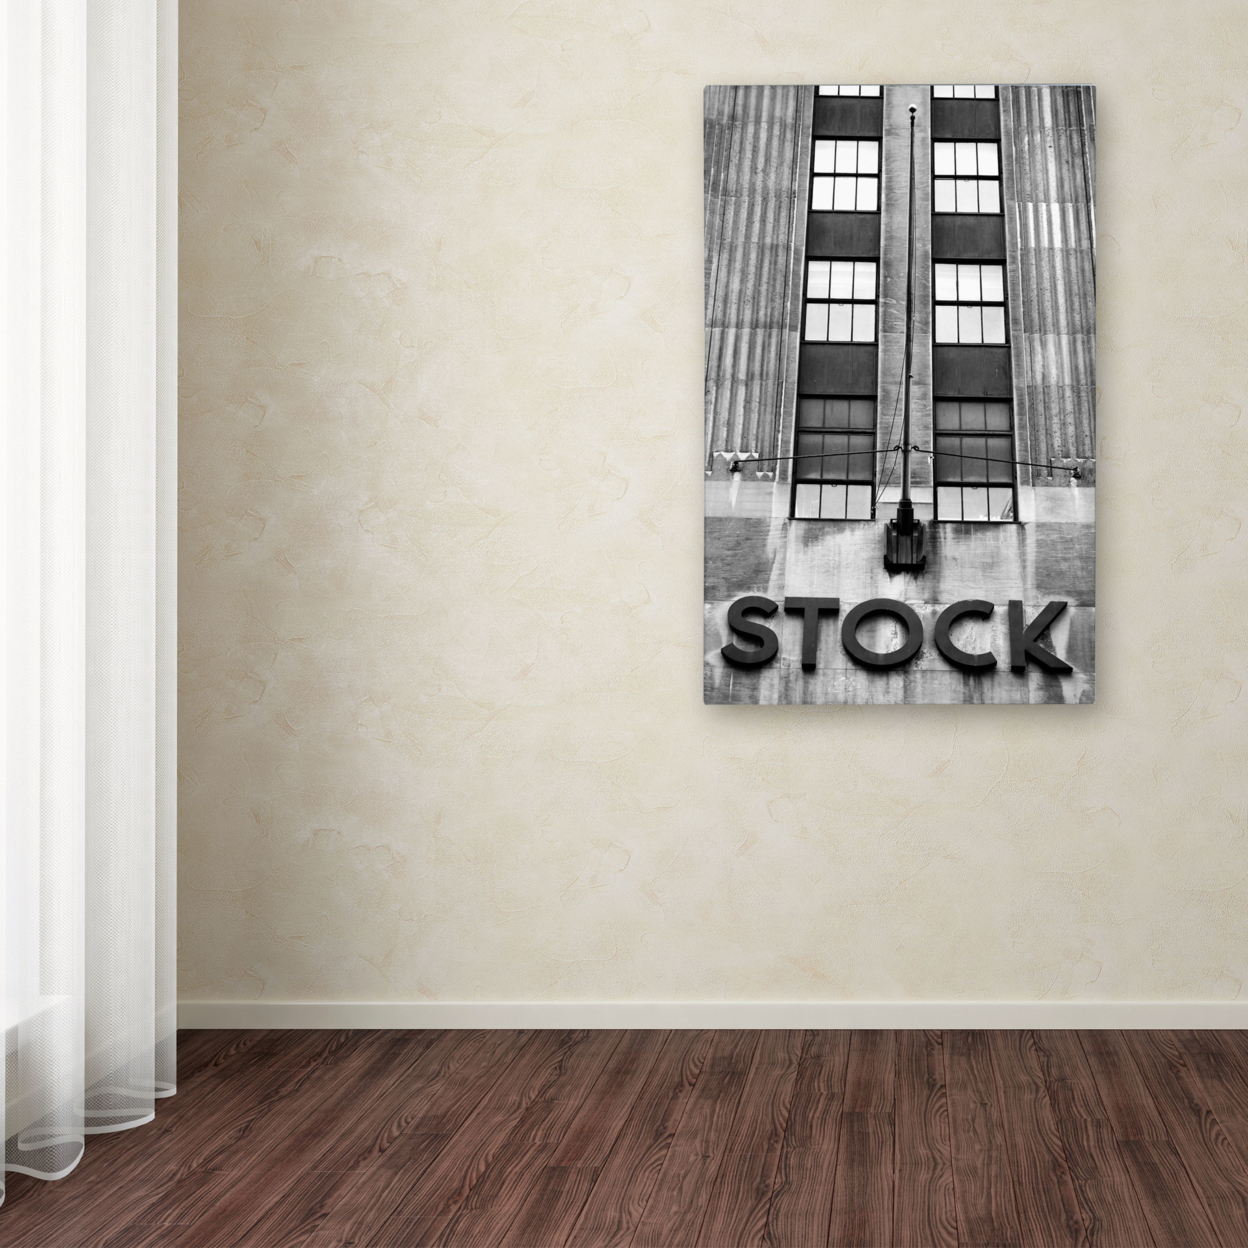 Yale Gurney 'Wall Street STOCK' Canvas Art 16 X 24